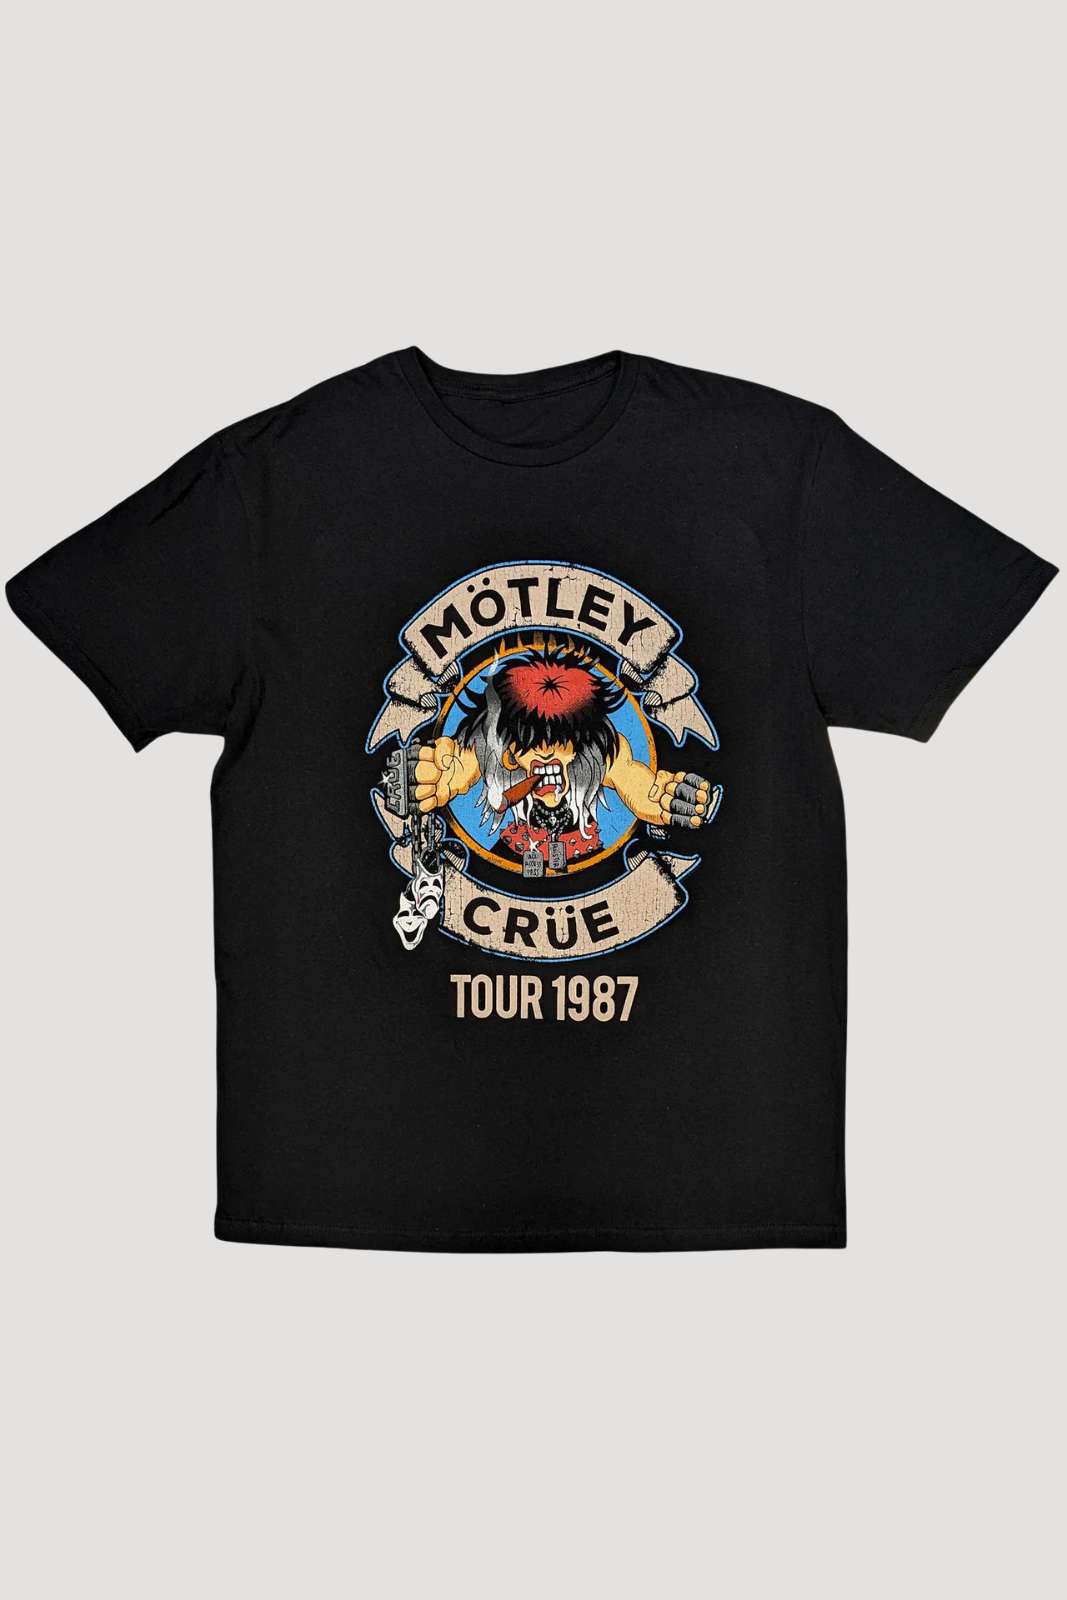 Mötley Crüe Tour of '87 Shirt